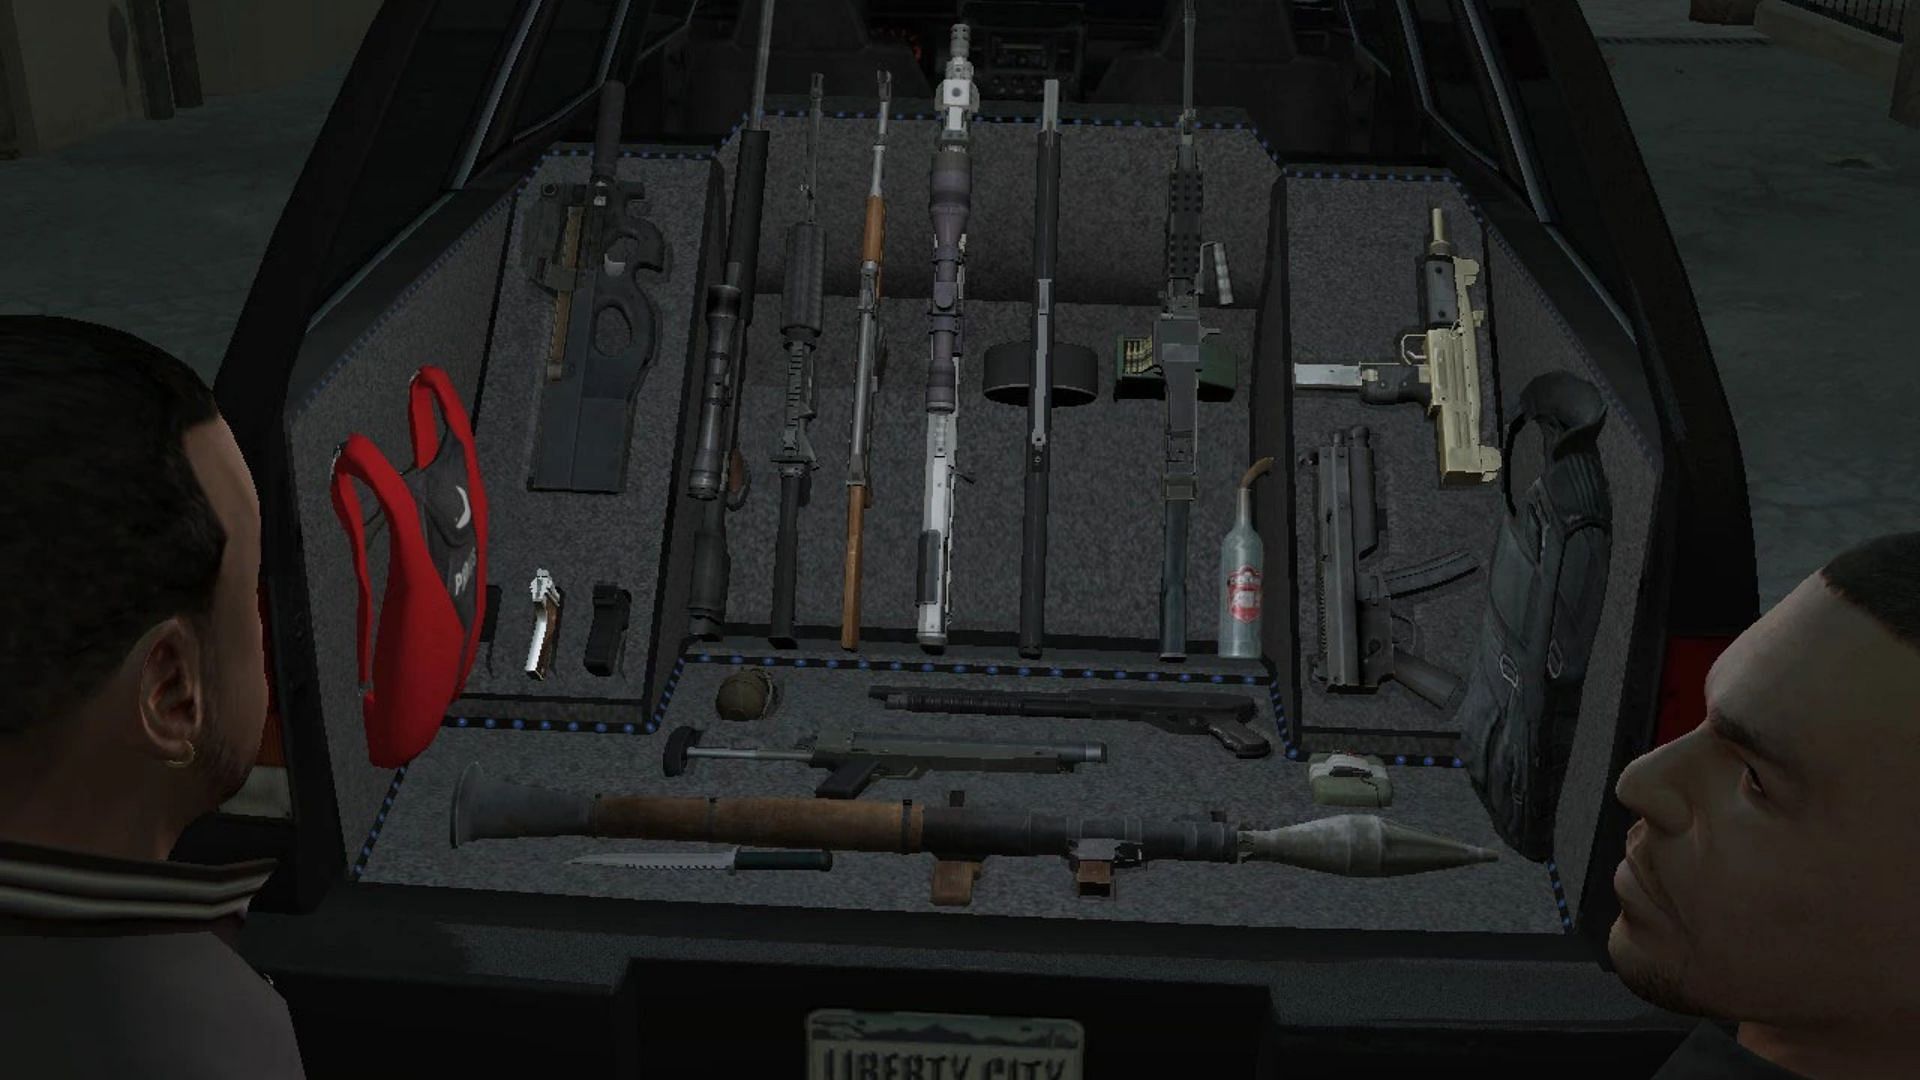 The Gun Van as it appears in GTA 4 Ballad of Gay Tony (Image via Rockstar Games)